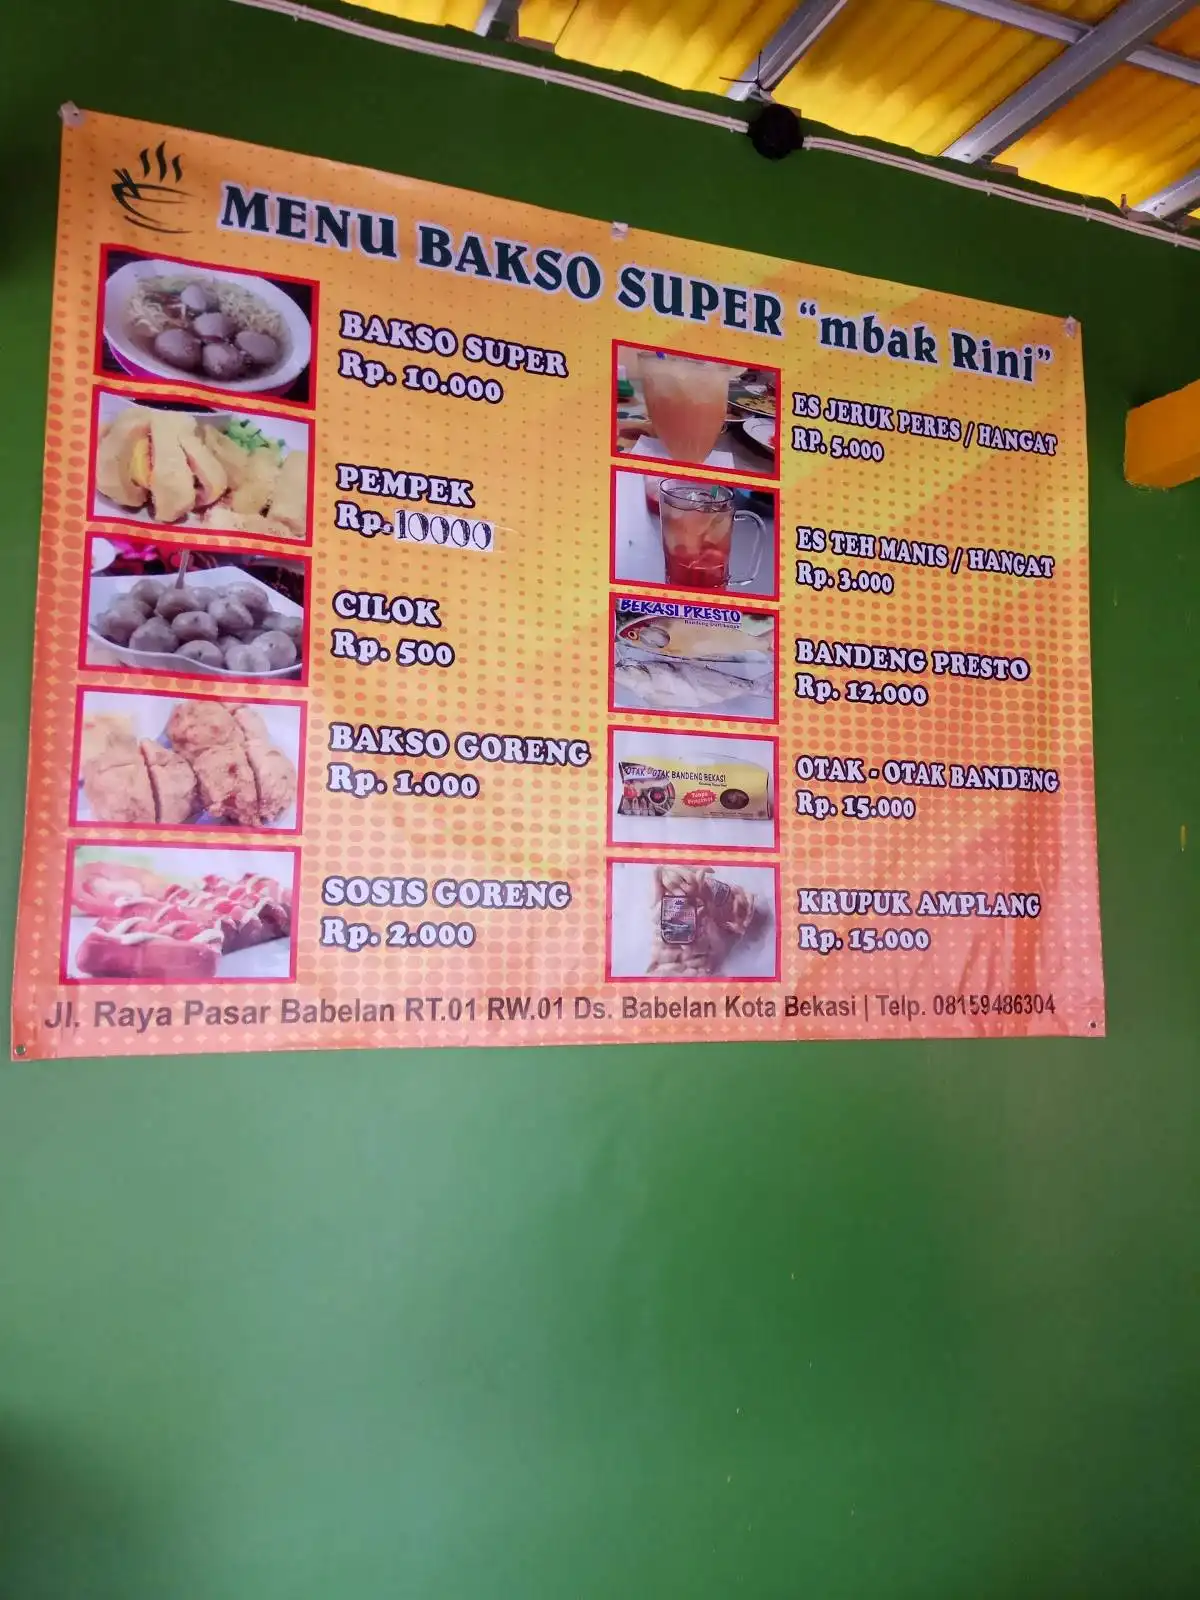 BAKSO SUPER "Mbak Rini"